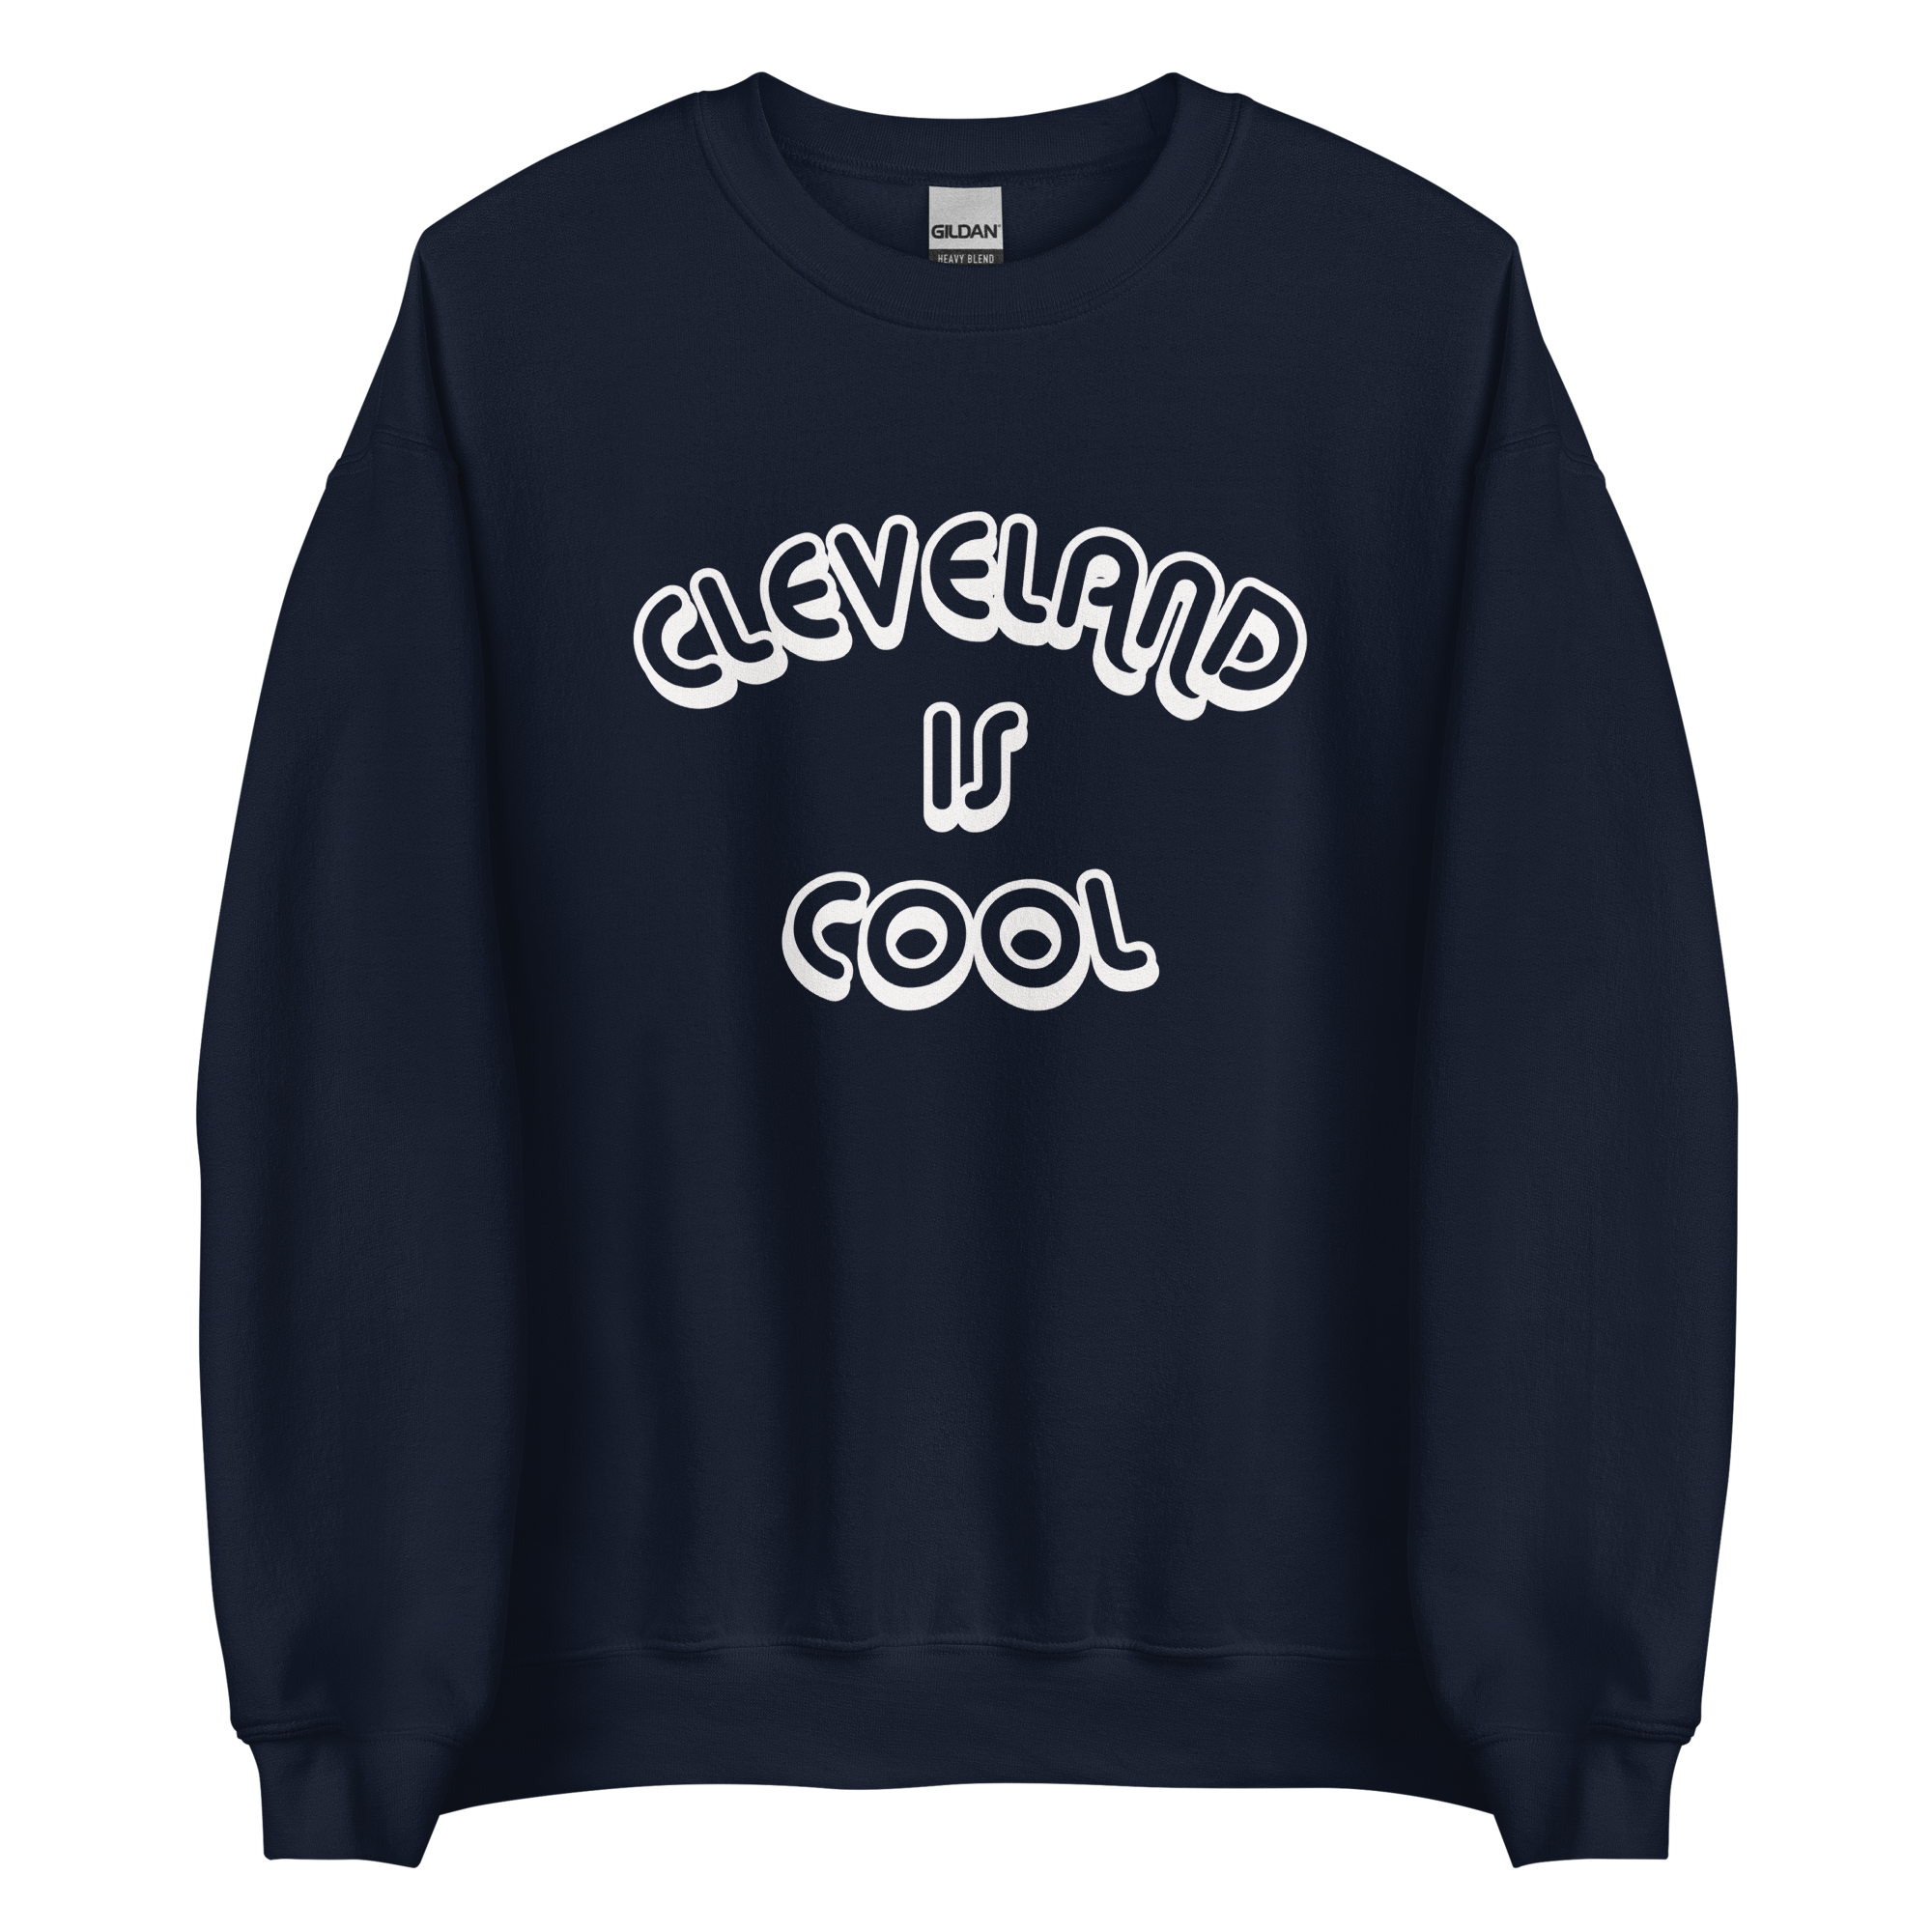 Cleveland Is Cool Navy Sweatshirt